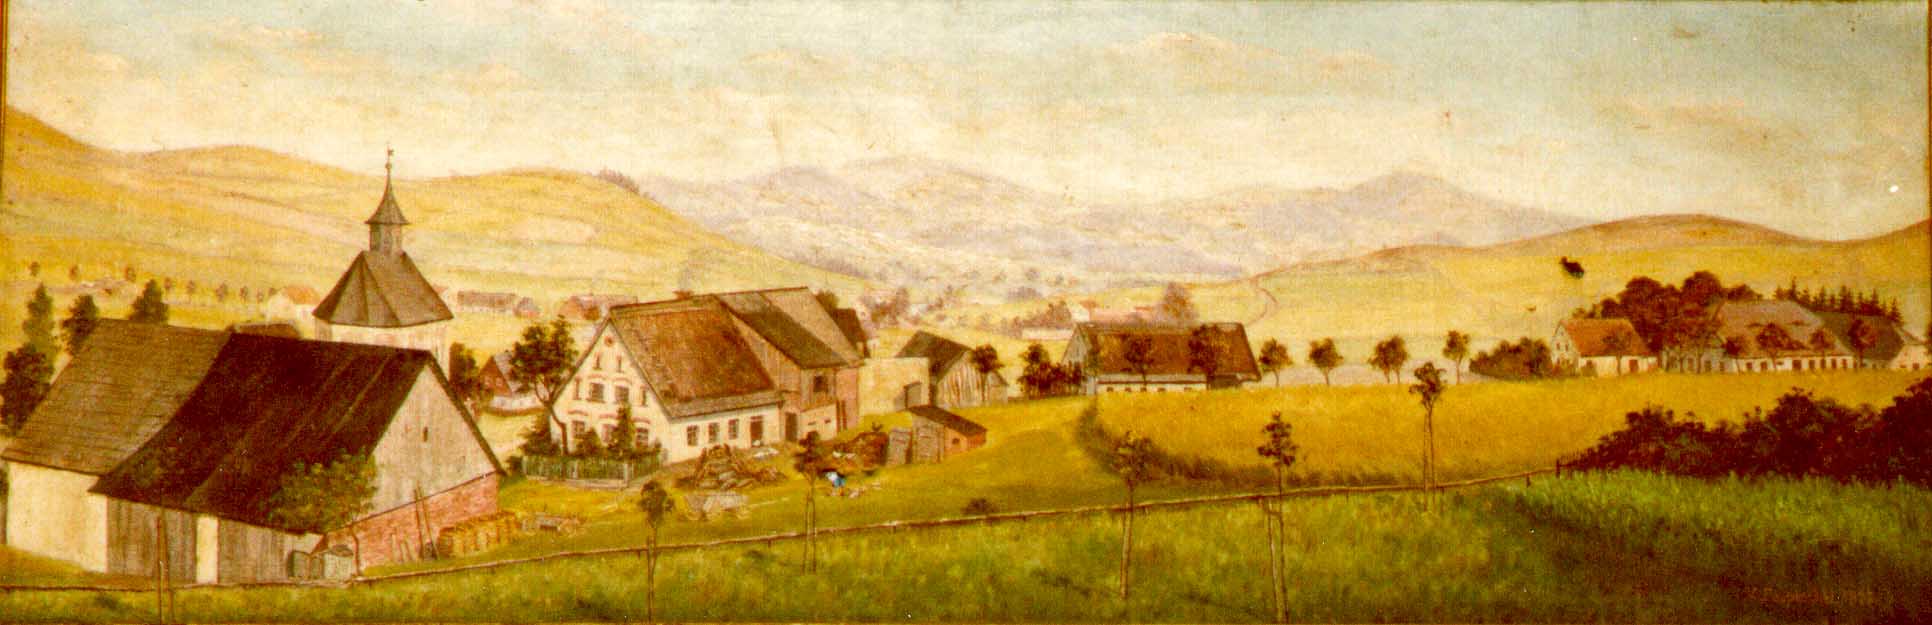 Reichhennersdorf 1900   93 KB